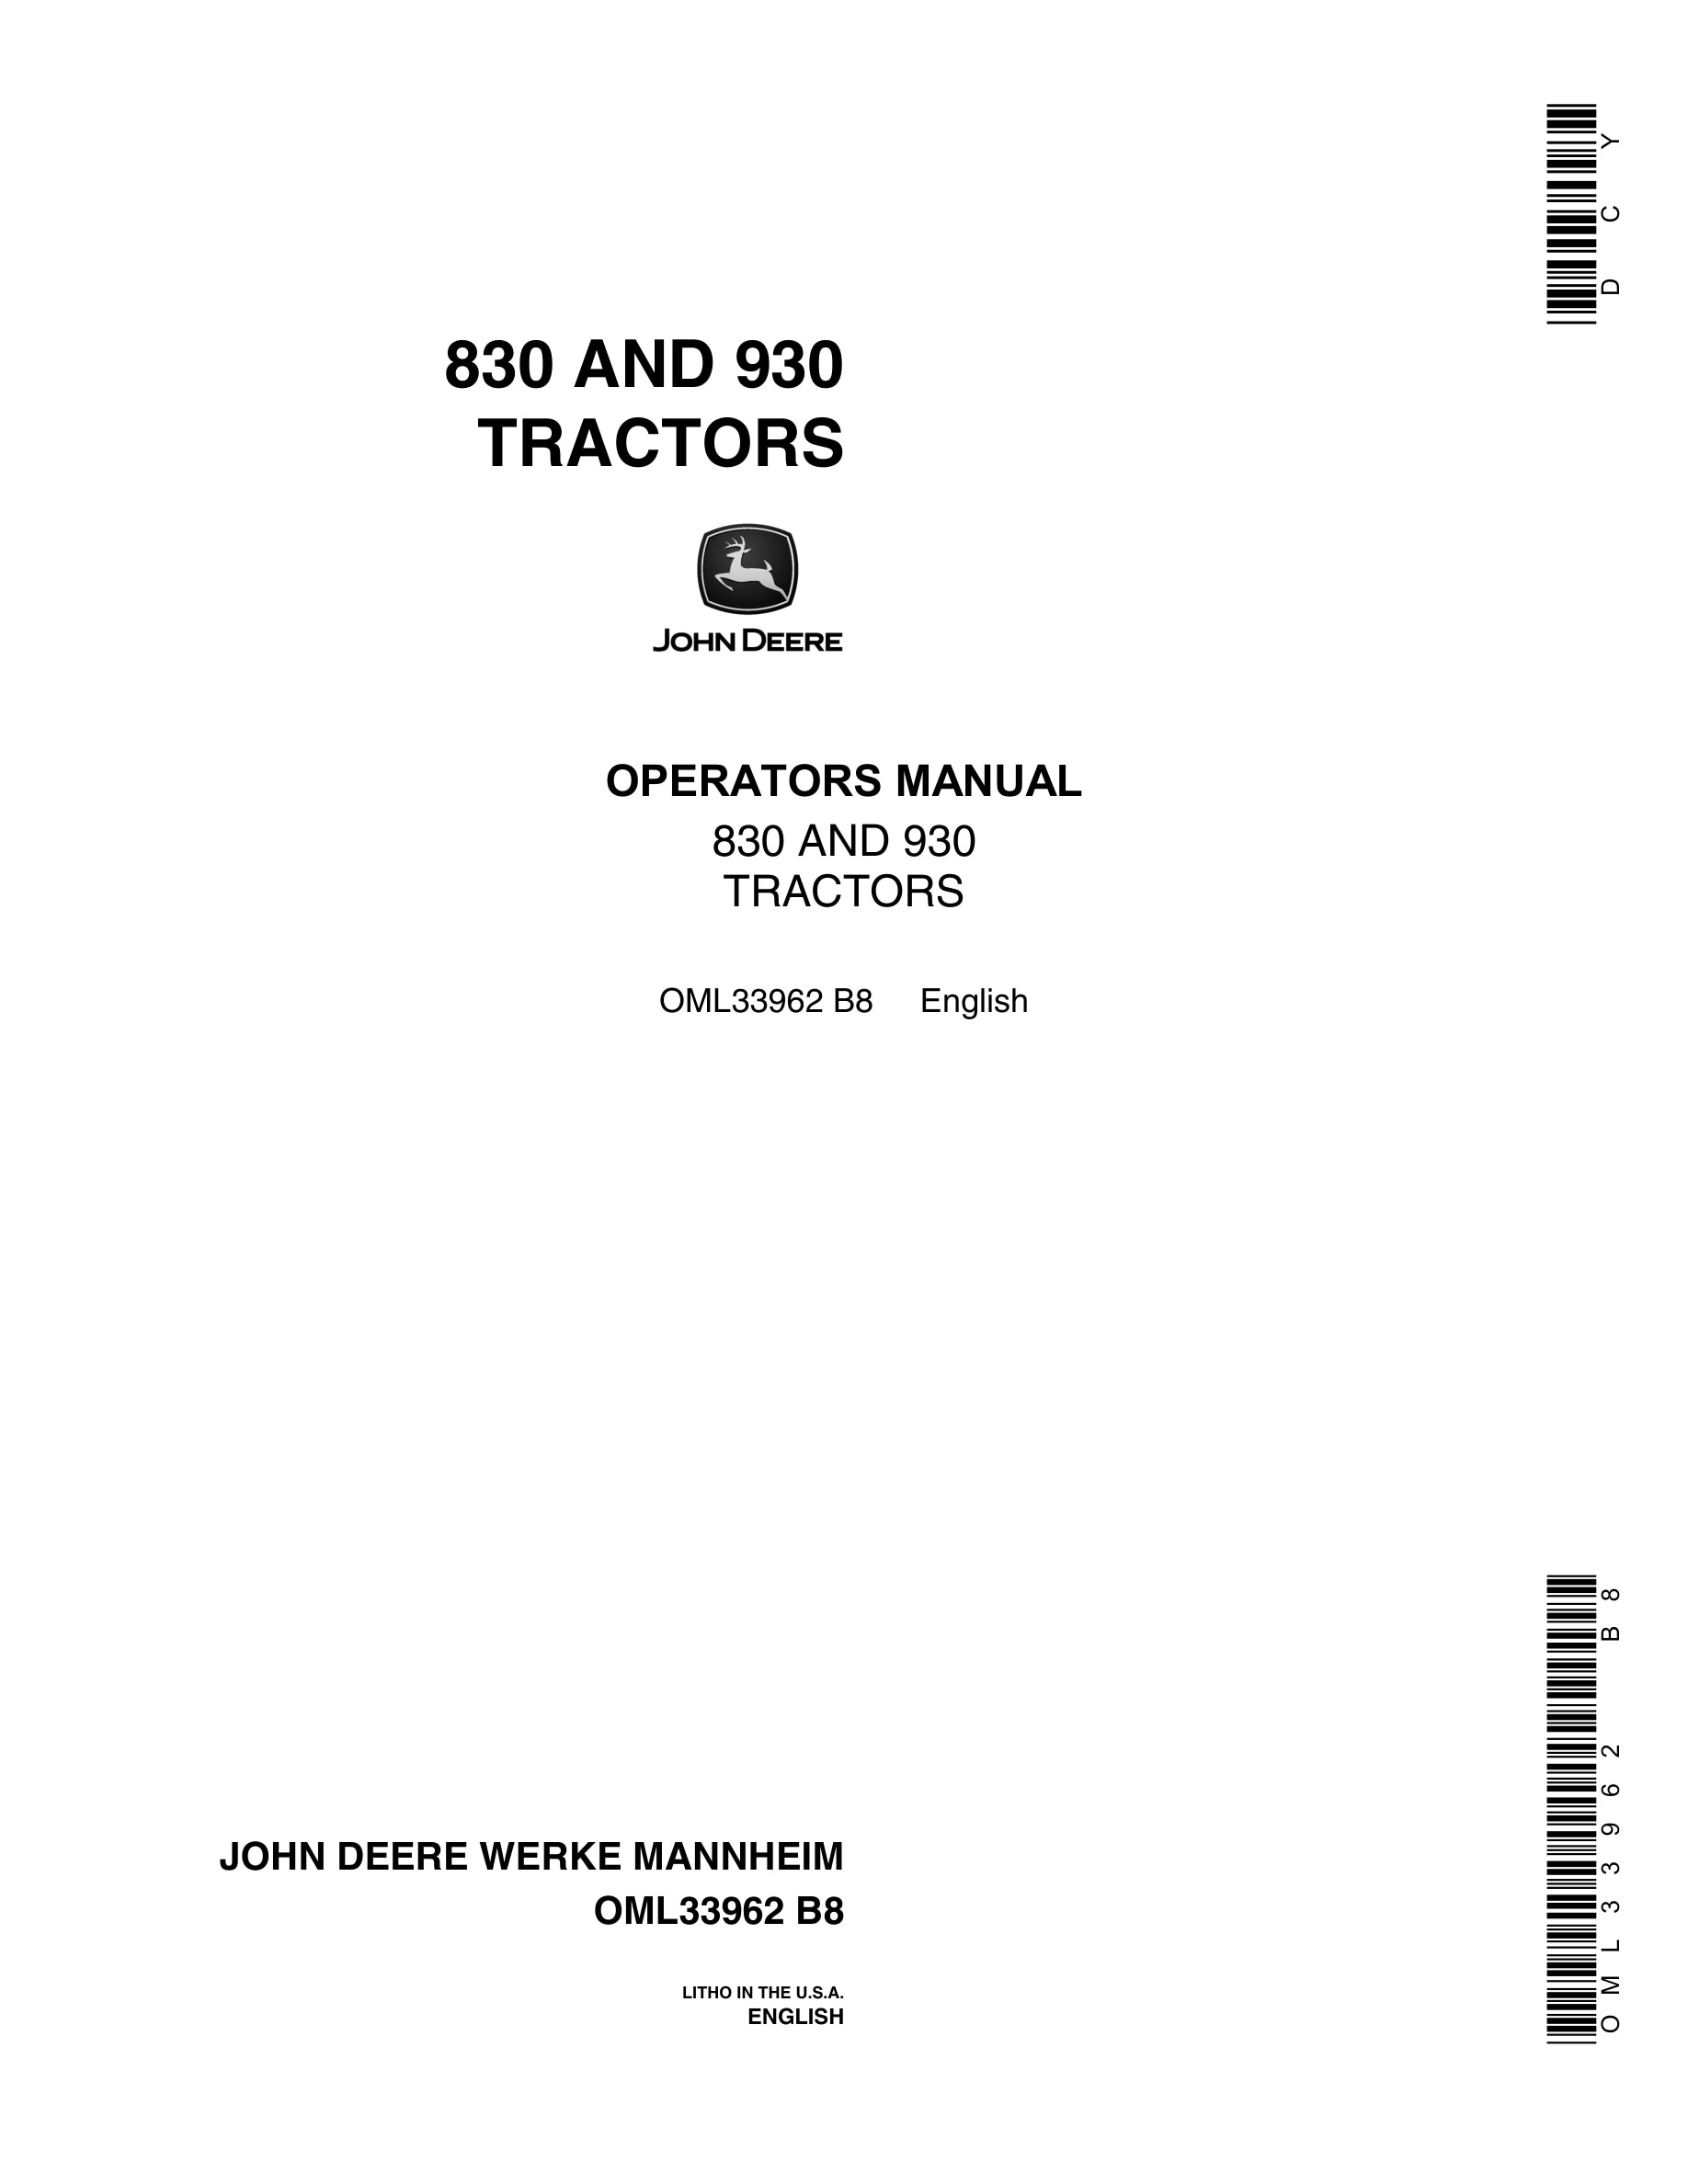 John Deere 830 And 930 Tractors Operator Manuals OML33962-1